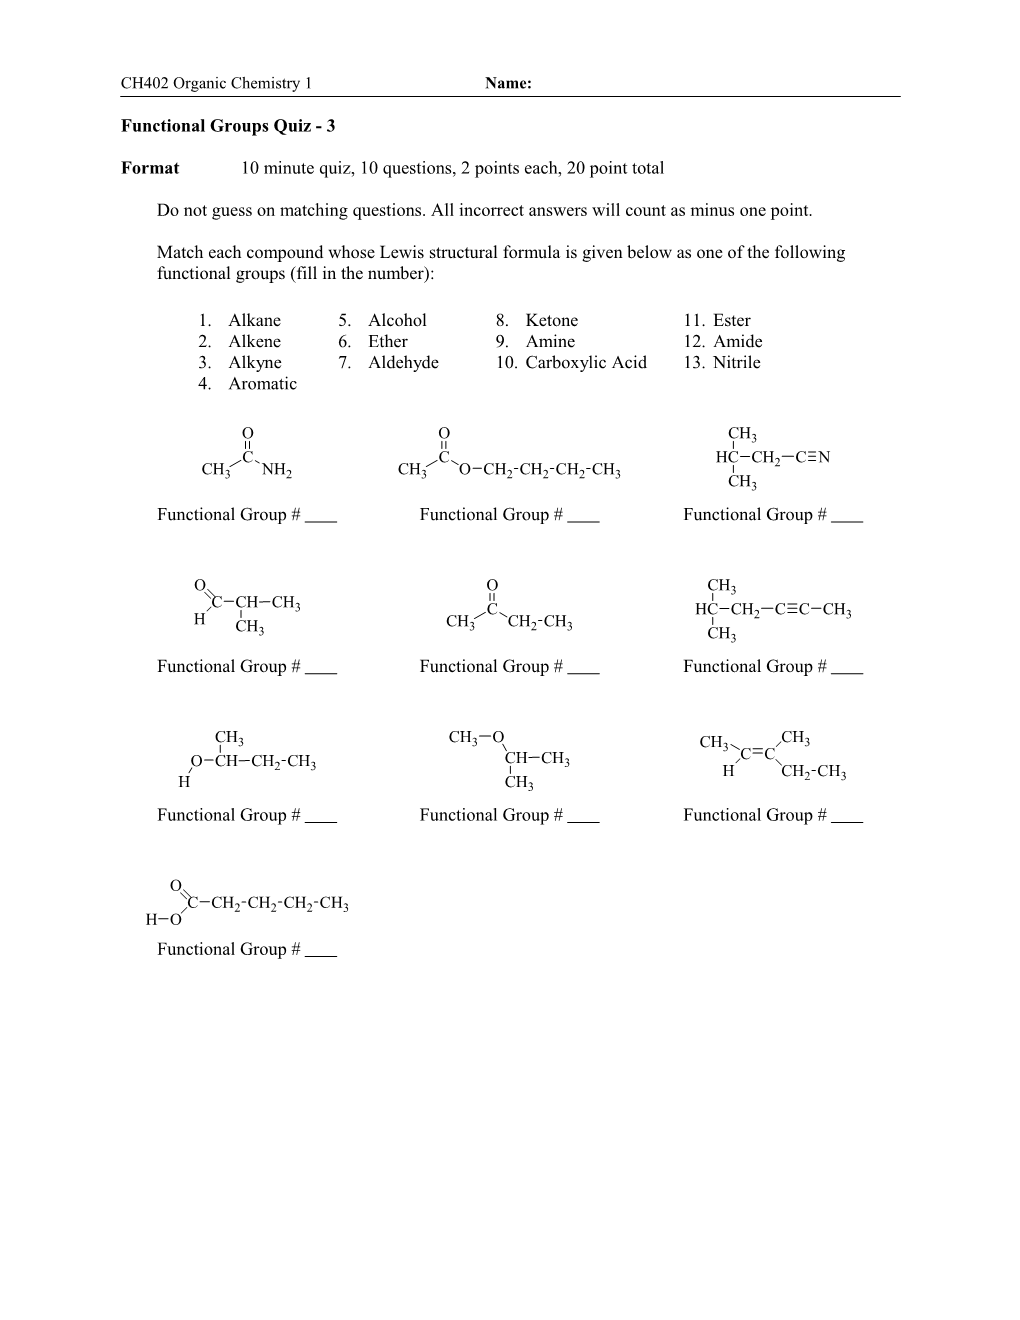 Functional Groups Quiz - 1